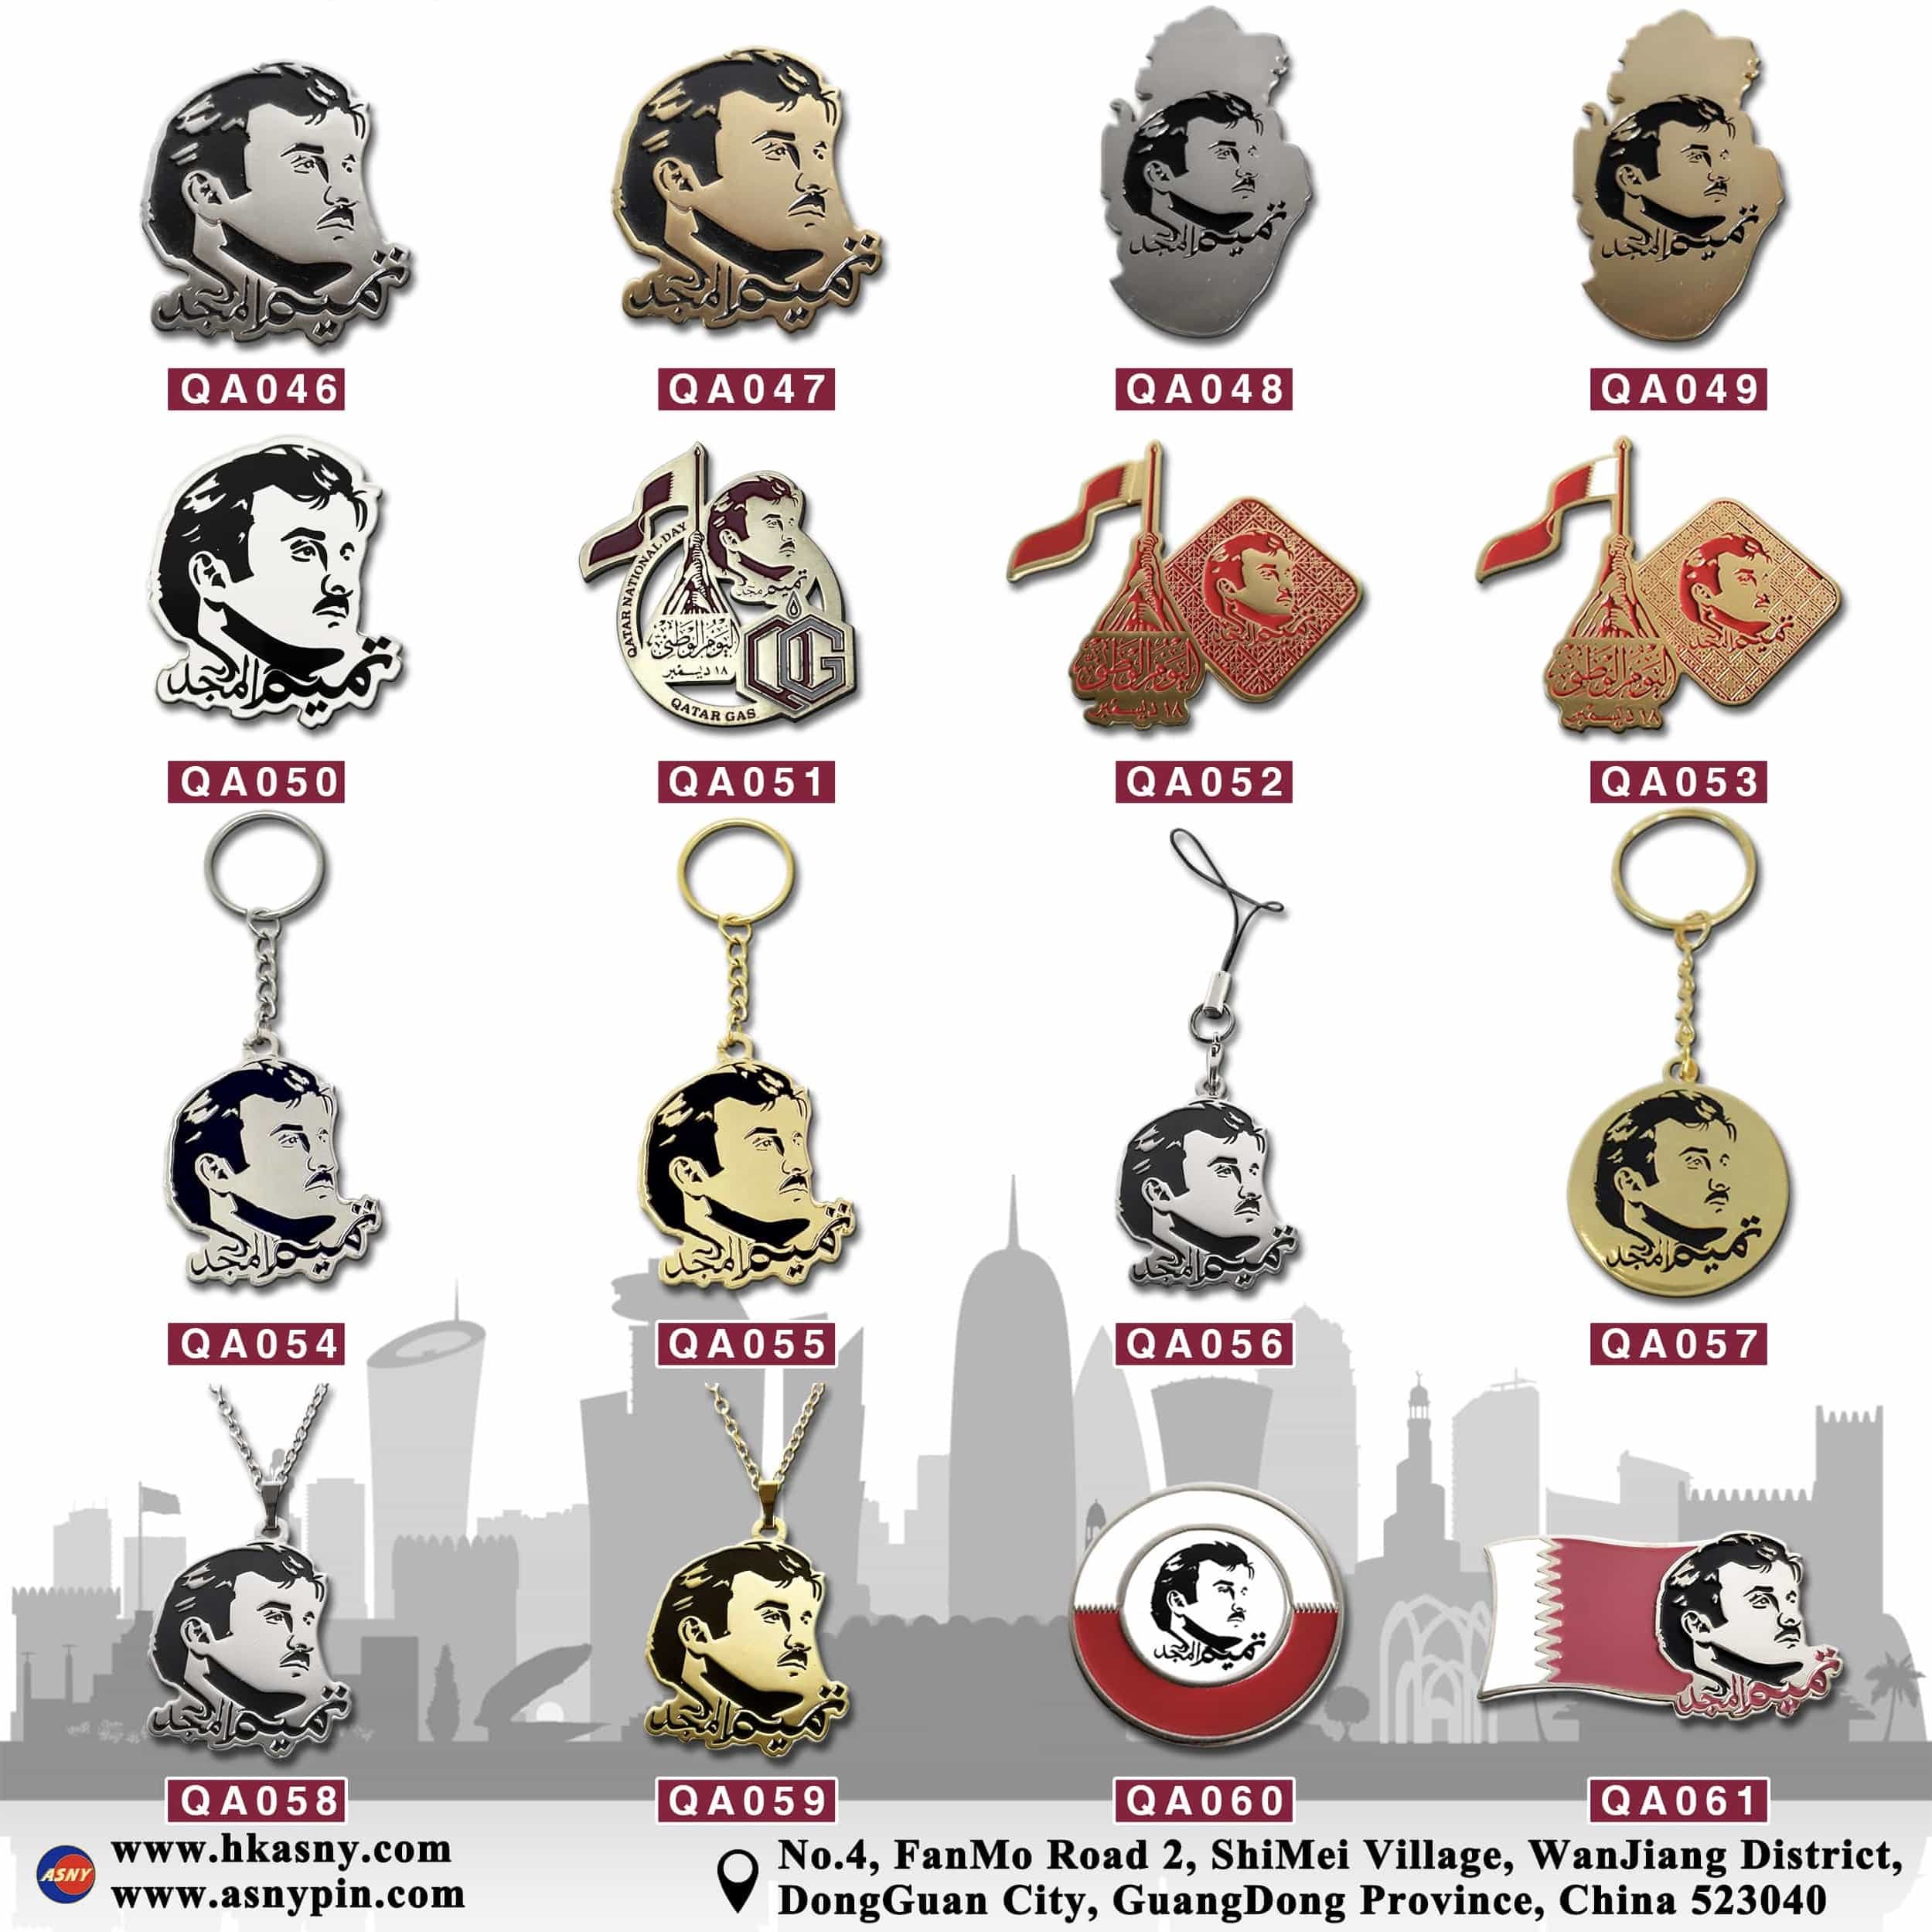 Catalog-Qatar-Necklace-Keychain-Keyring-Cufflinks-Price-Design-Customization-Production-Maker-Supply-Factory